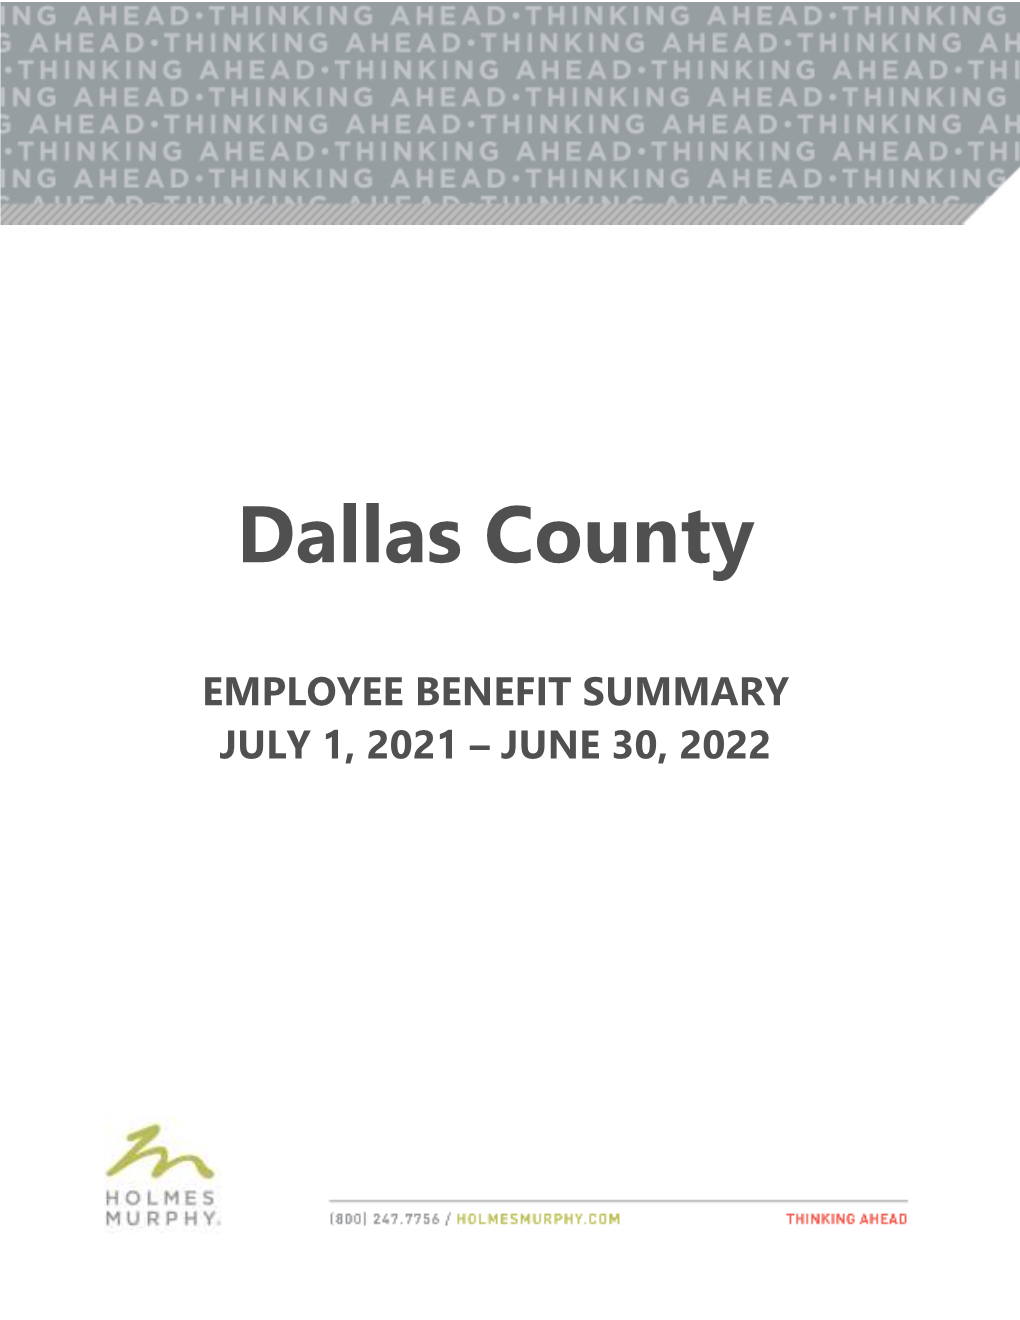 Employee Benefits Summary July 1, 2021